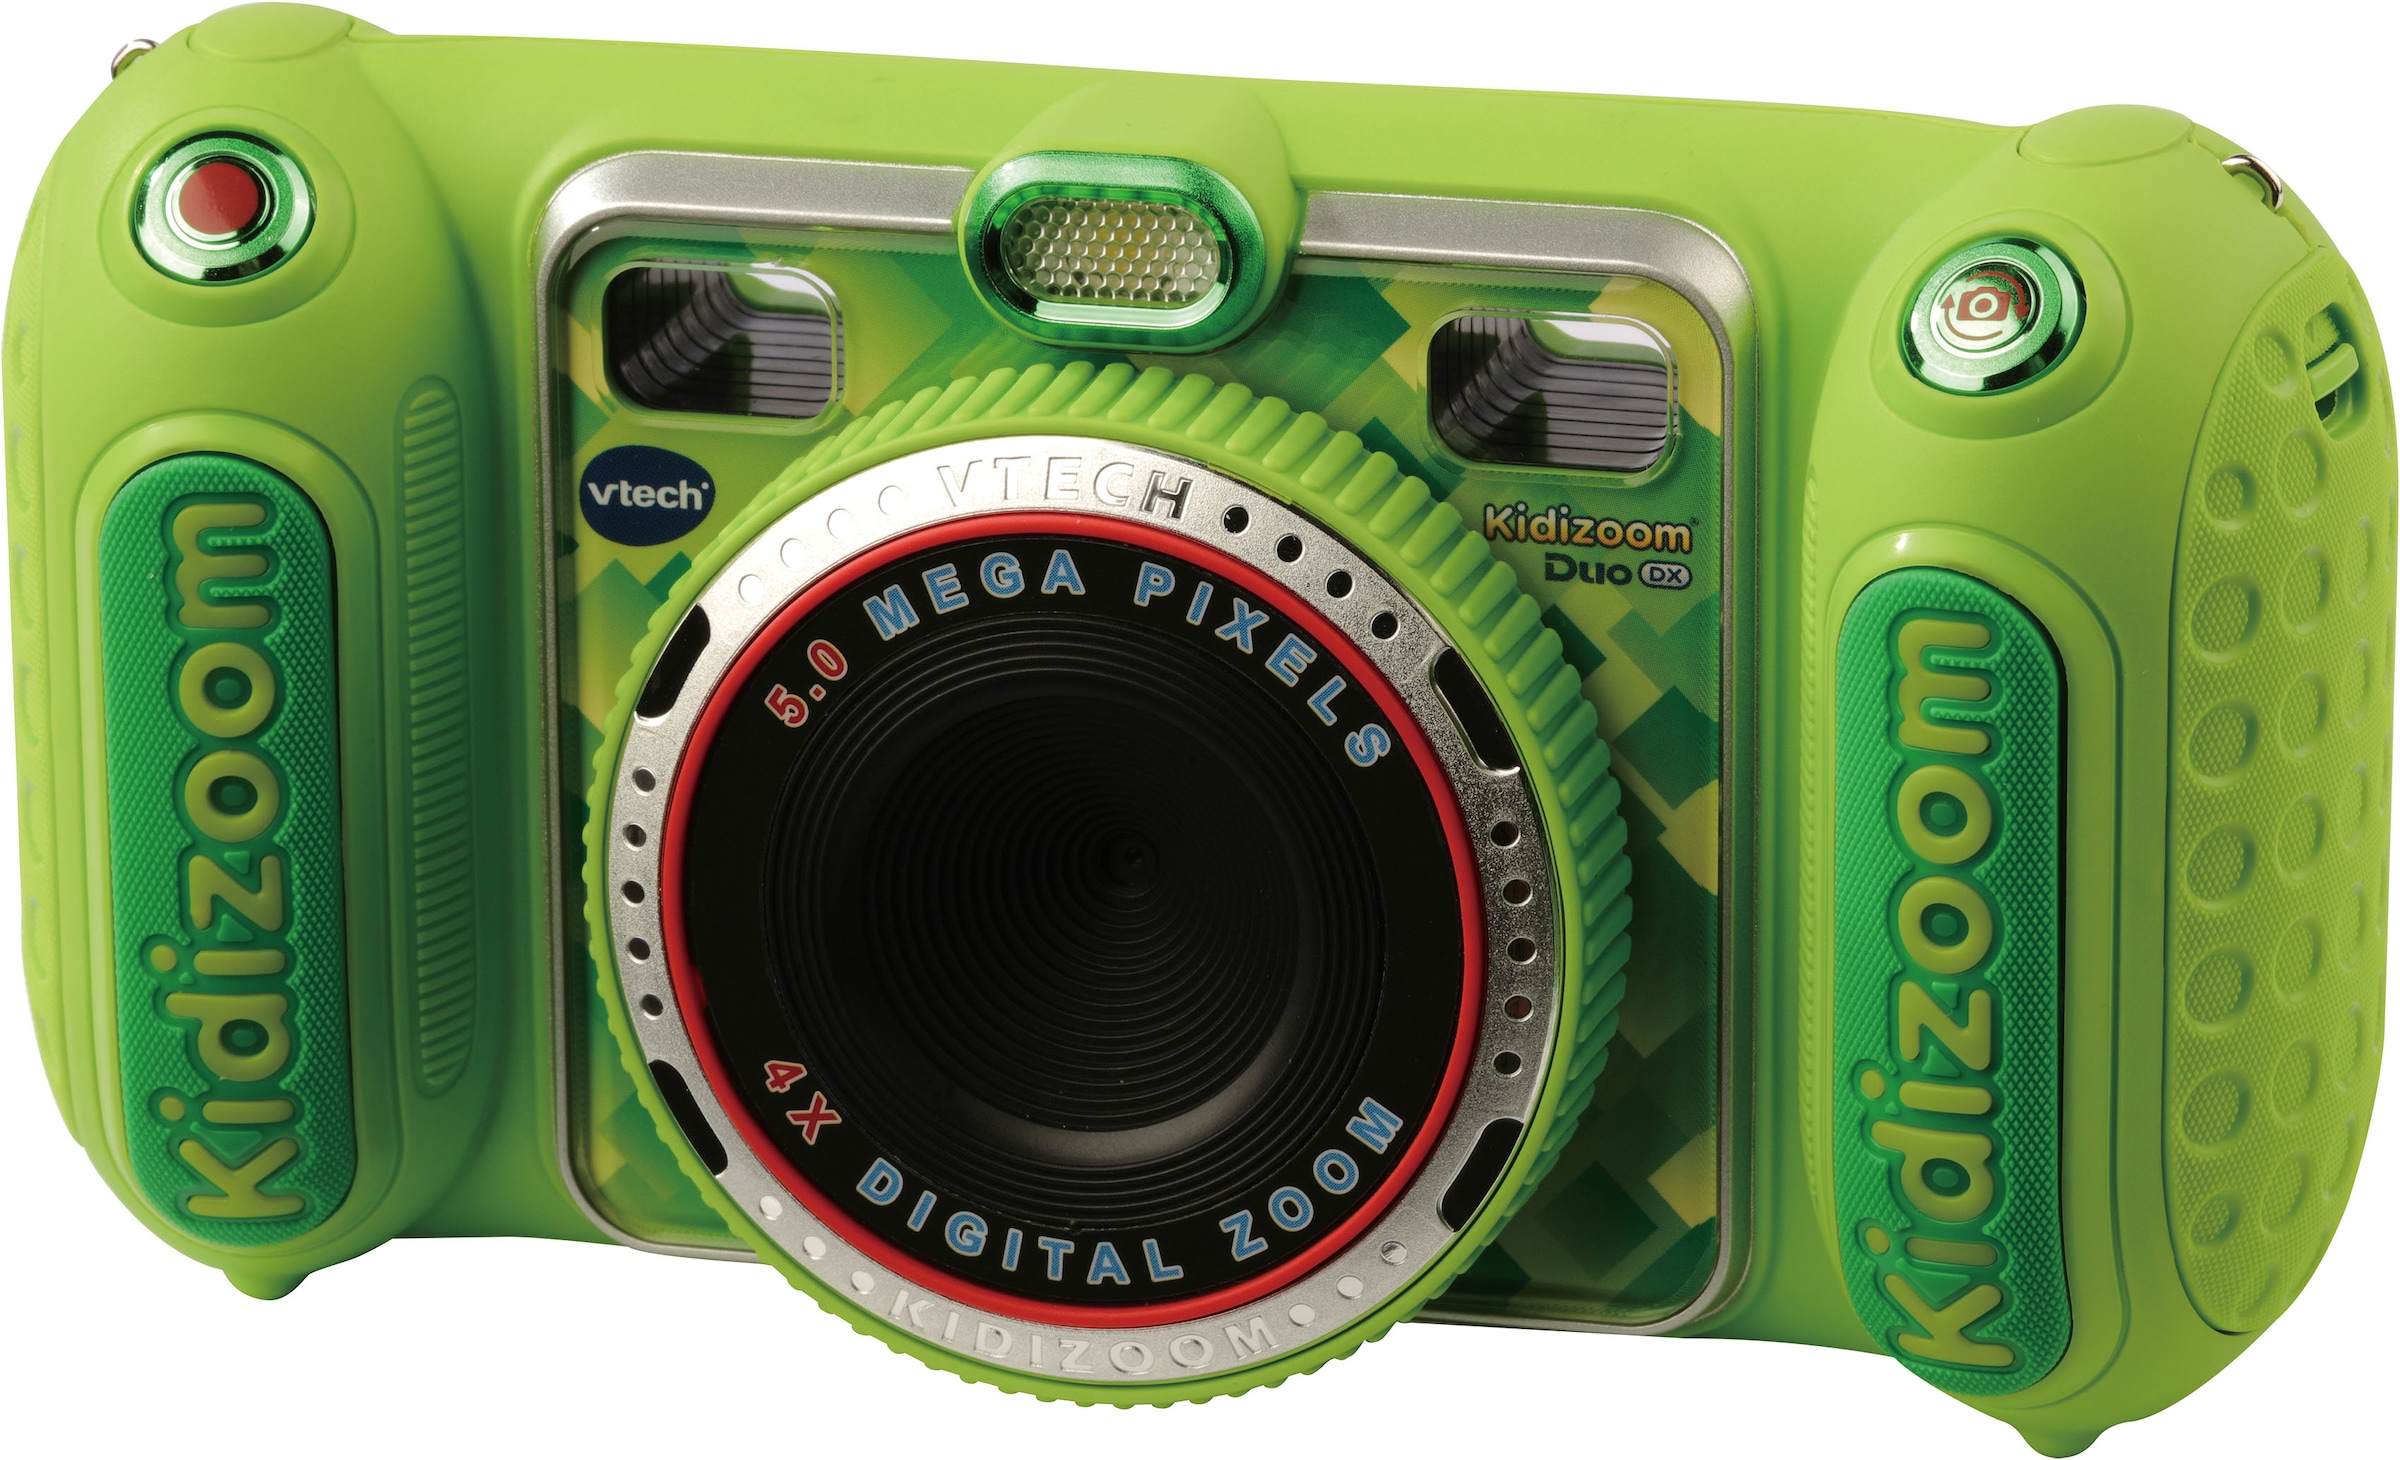 Vtech® Kinderkamera »Kidizoom Duo DX, grün«, 5 MP, inklusive